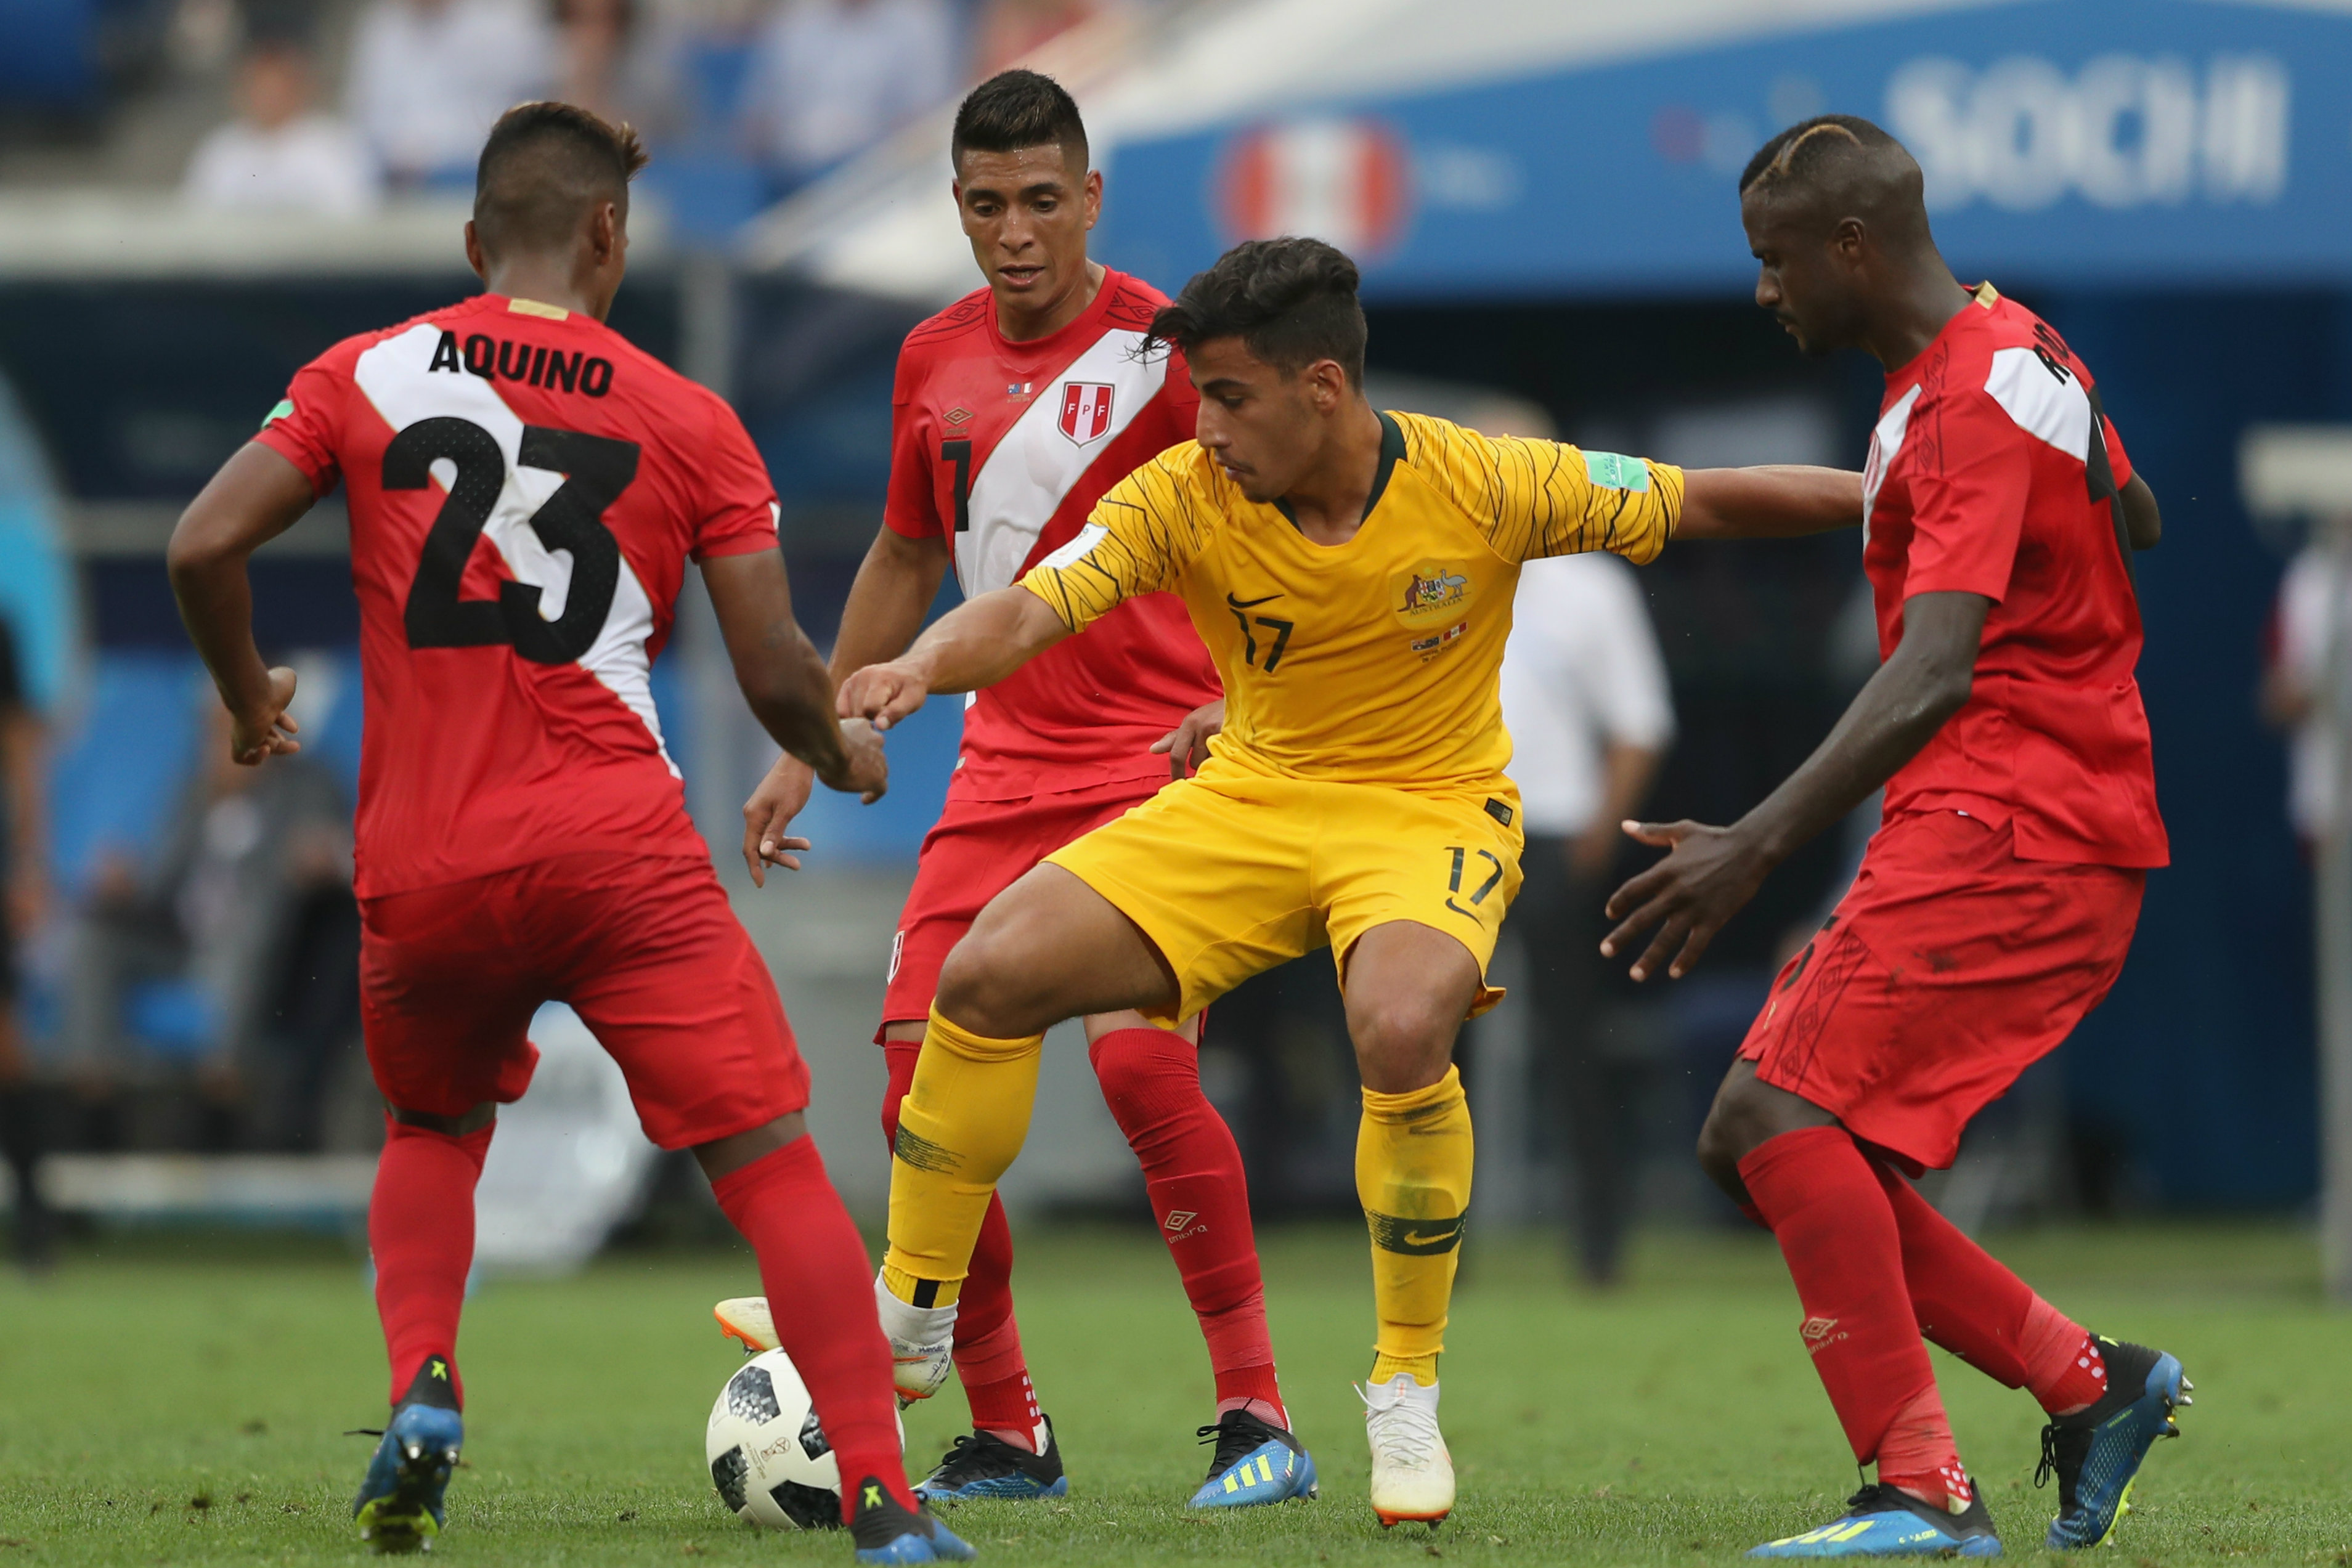 Three Peruvian players surround Daniel Arzani in the game in Sochi.